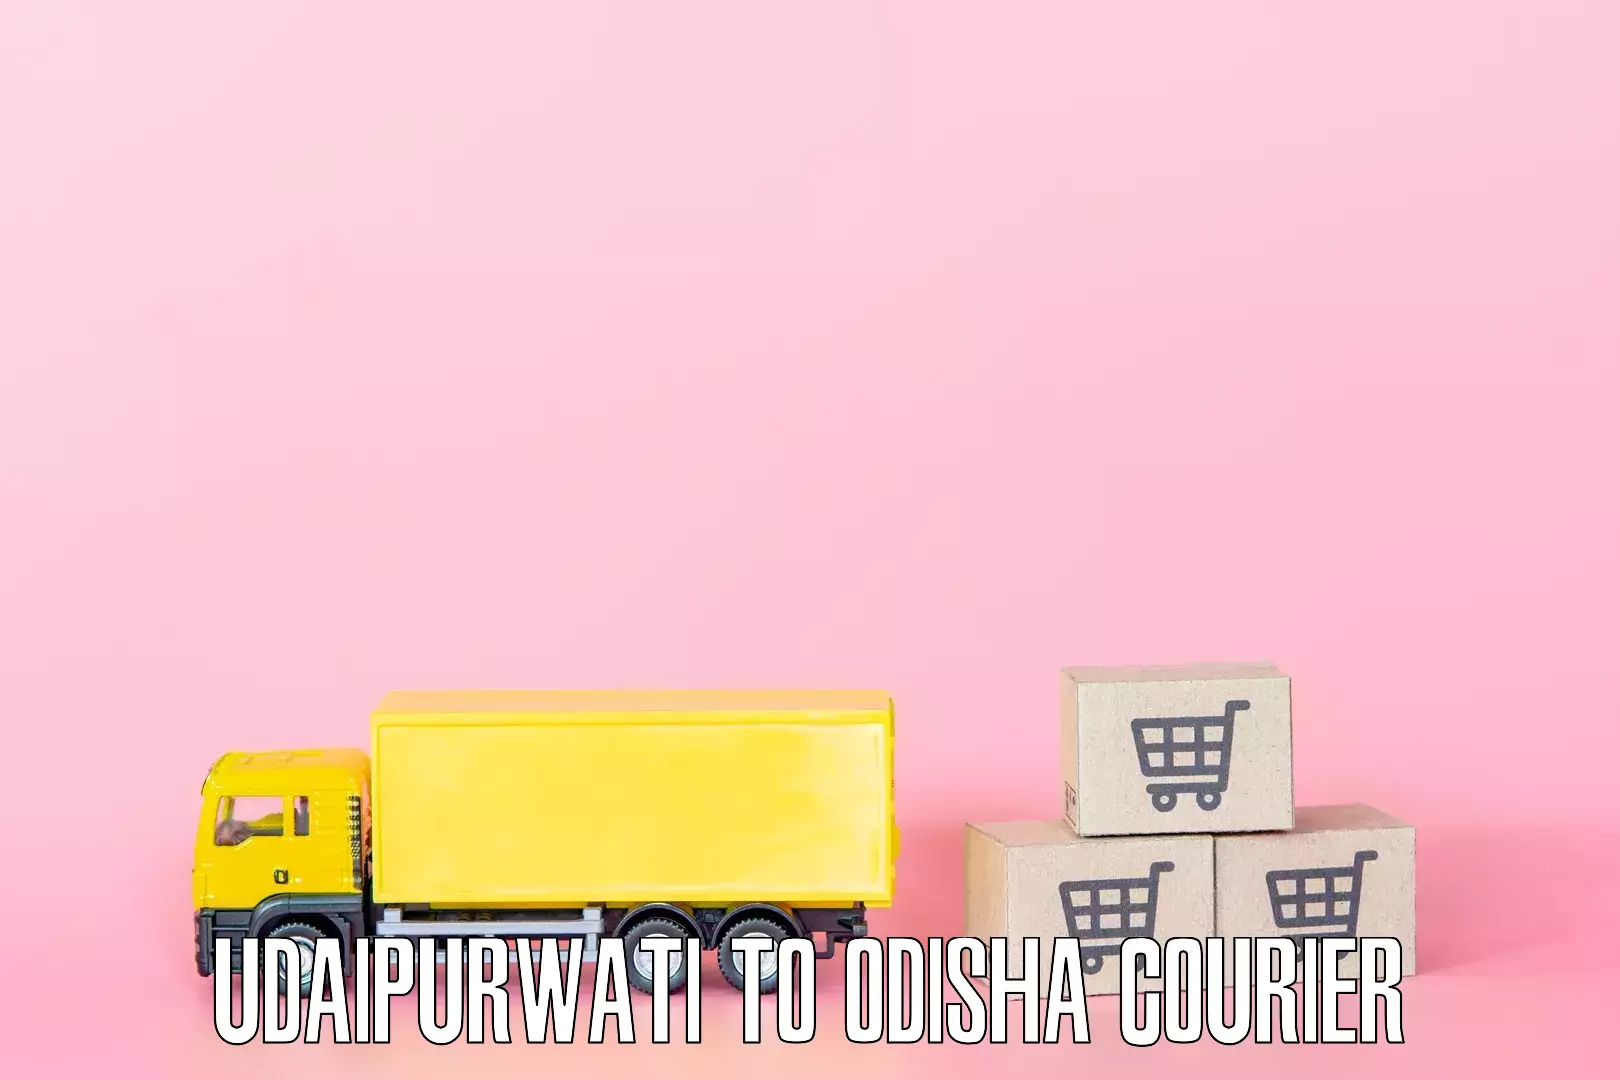 Efficient moving strategies Udaipurwati to Odisha